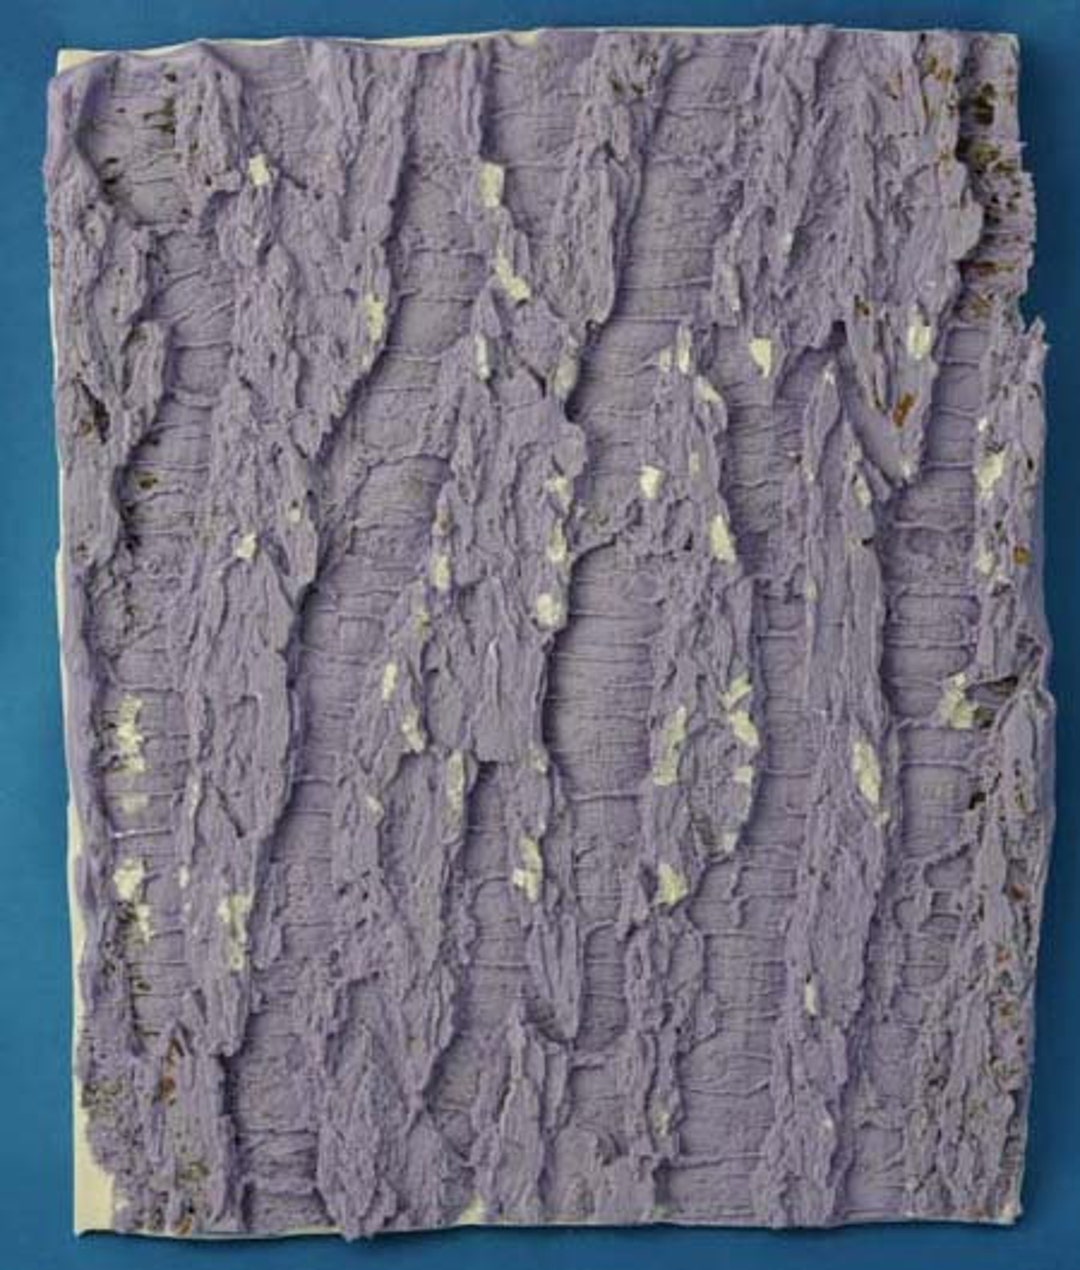 Karen-enhanced Lace Mold by Marvelous Molds 